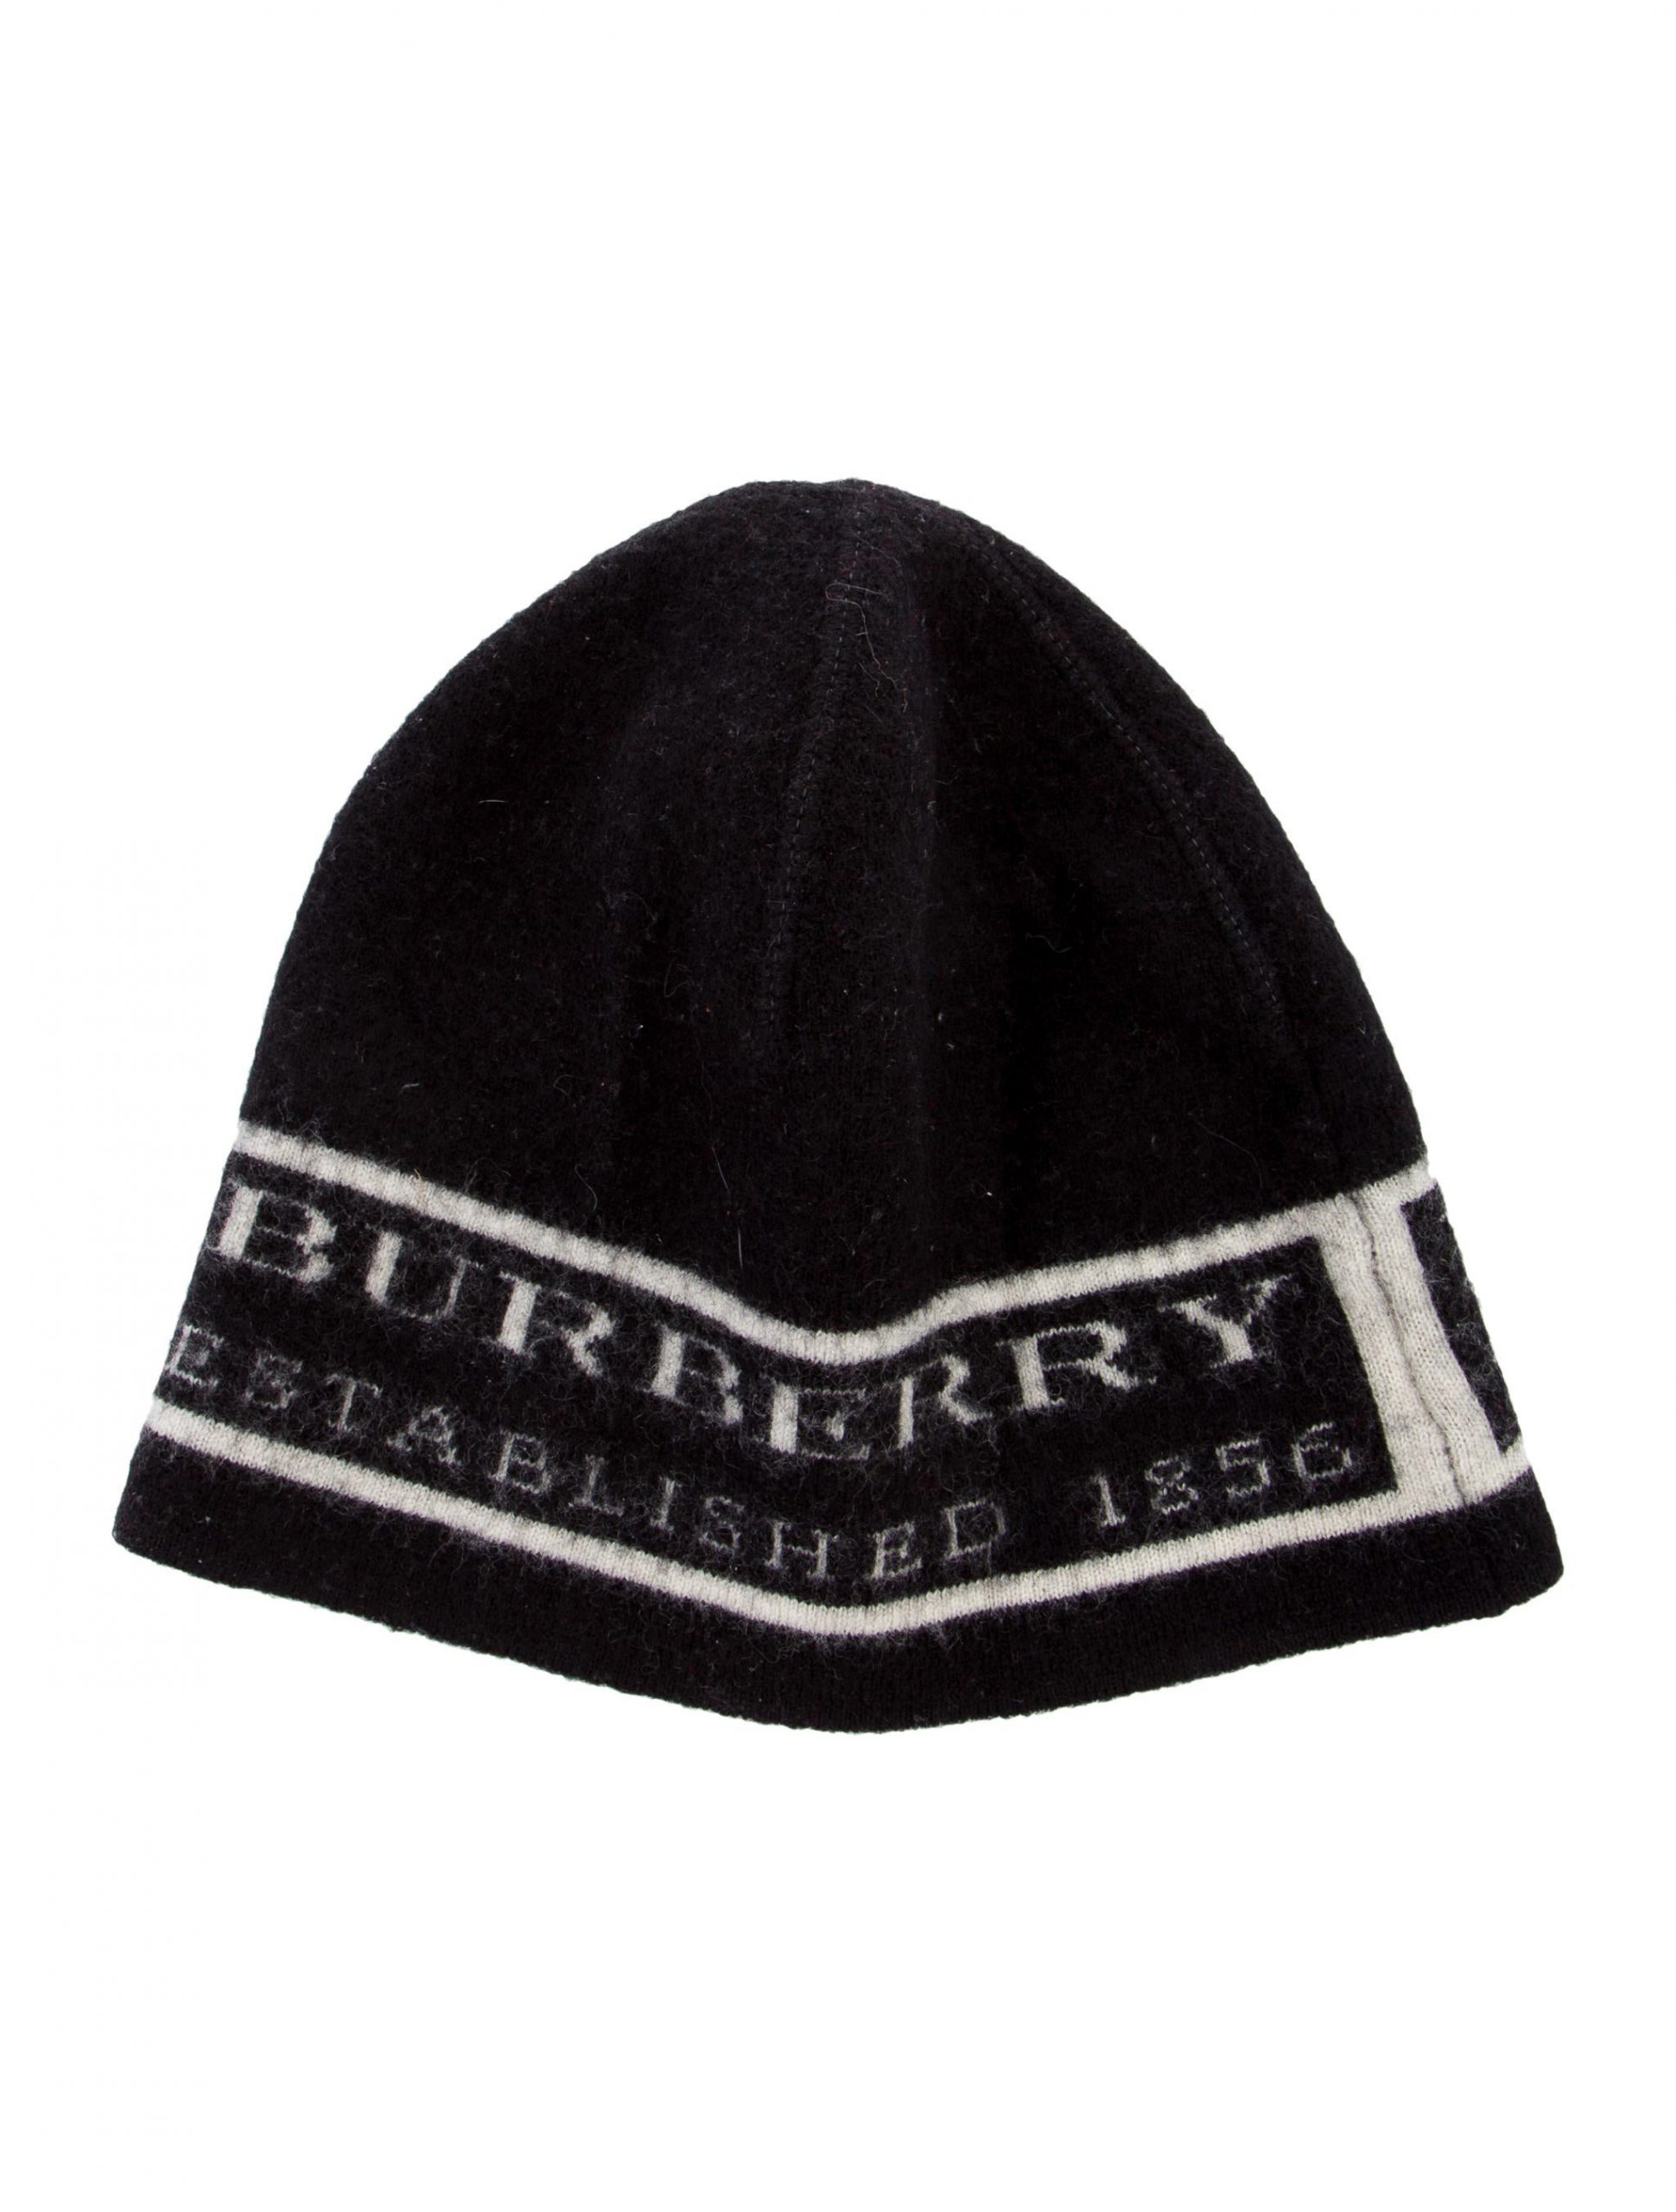 Burberry Logo Knit Beanie - Accessories - Bur82634 | The pour Burberry Beanie